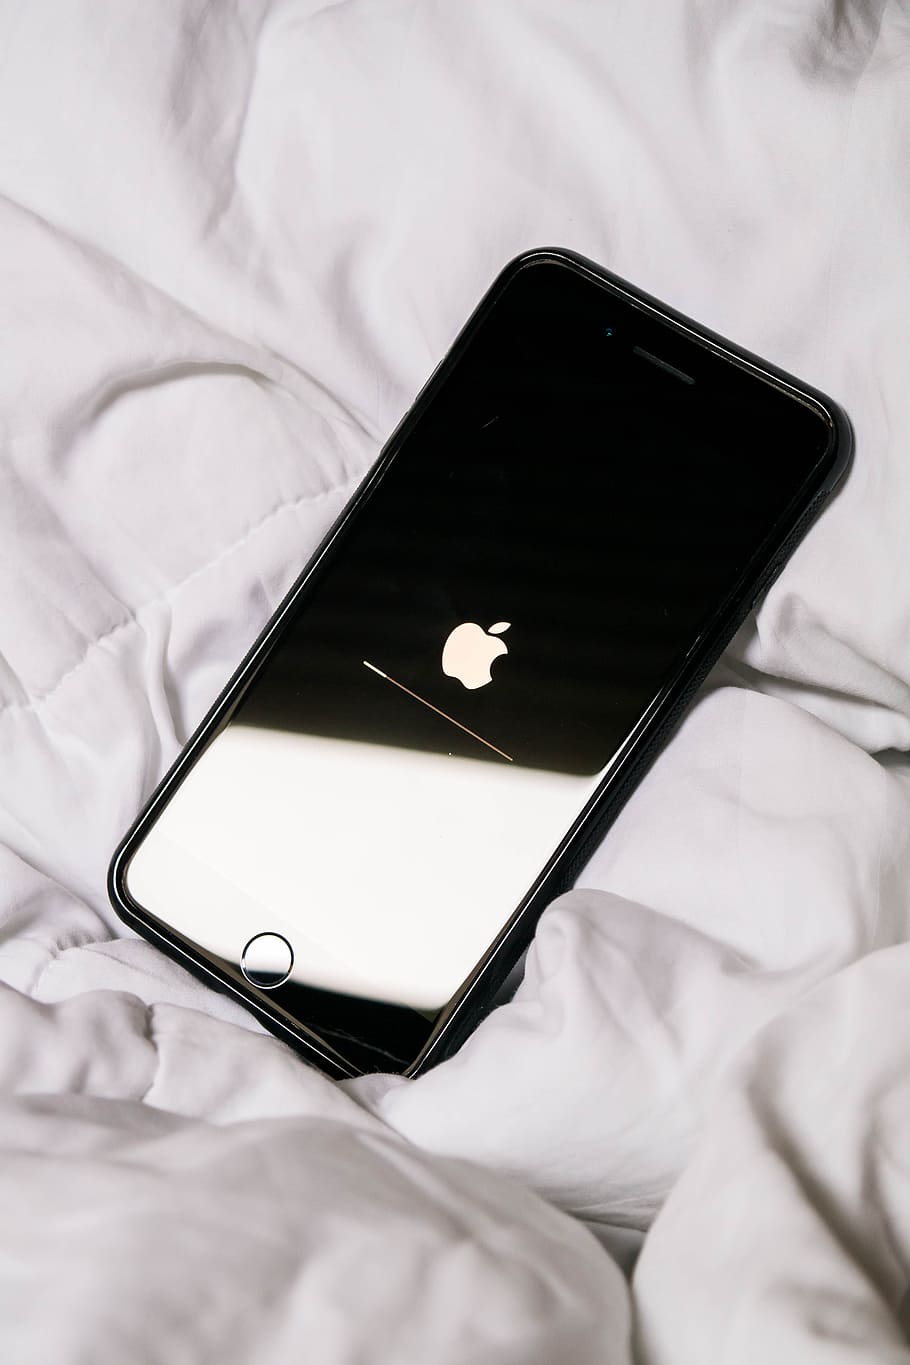 turned-off black iPhone, bedding, apple, reflection, minimal